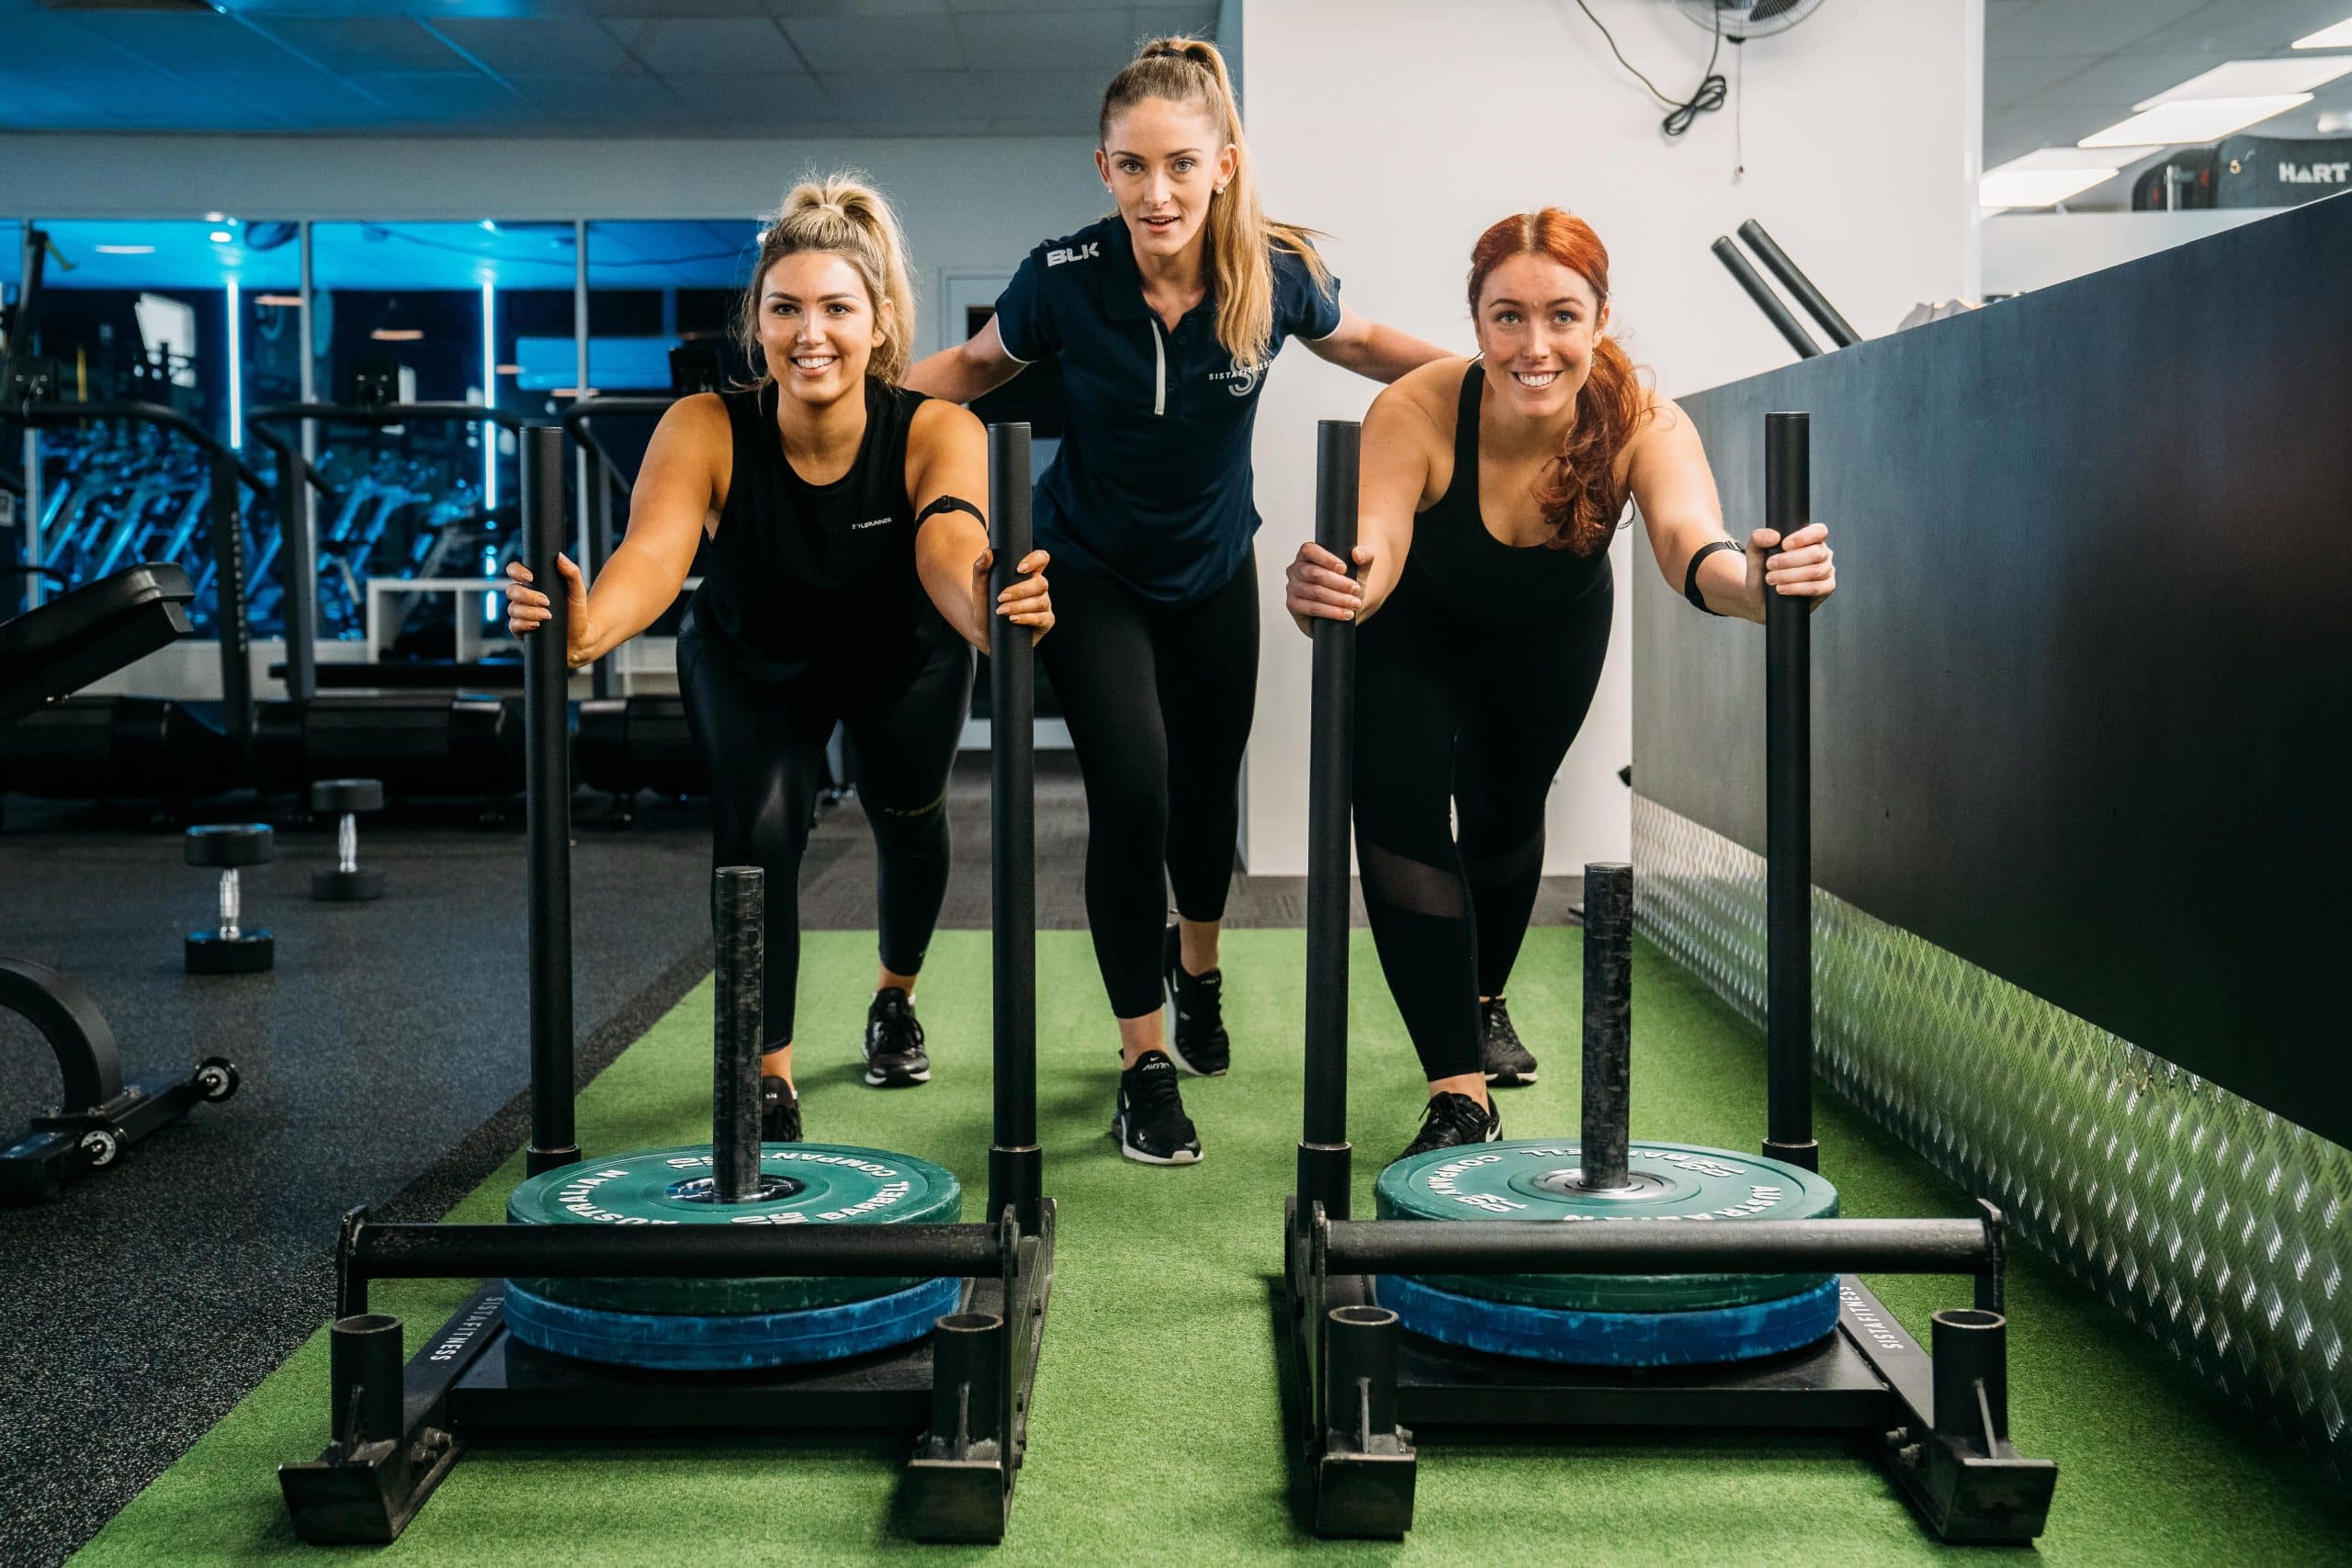 Two women pushing heavy weights, functional training